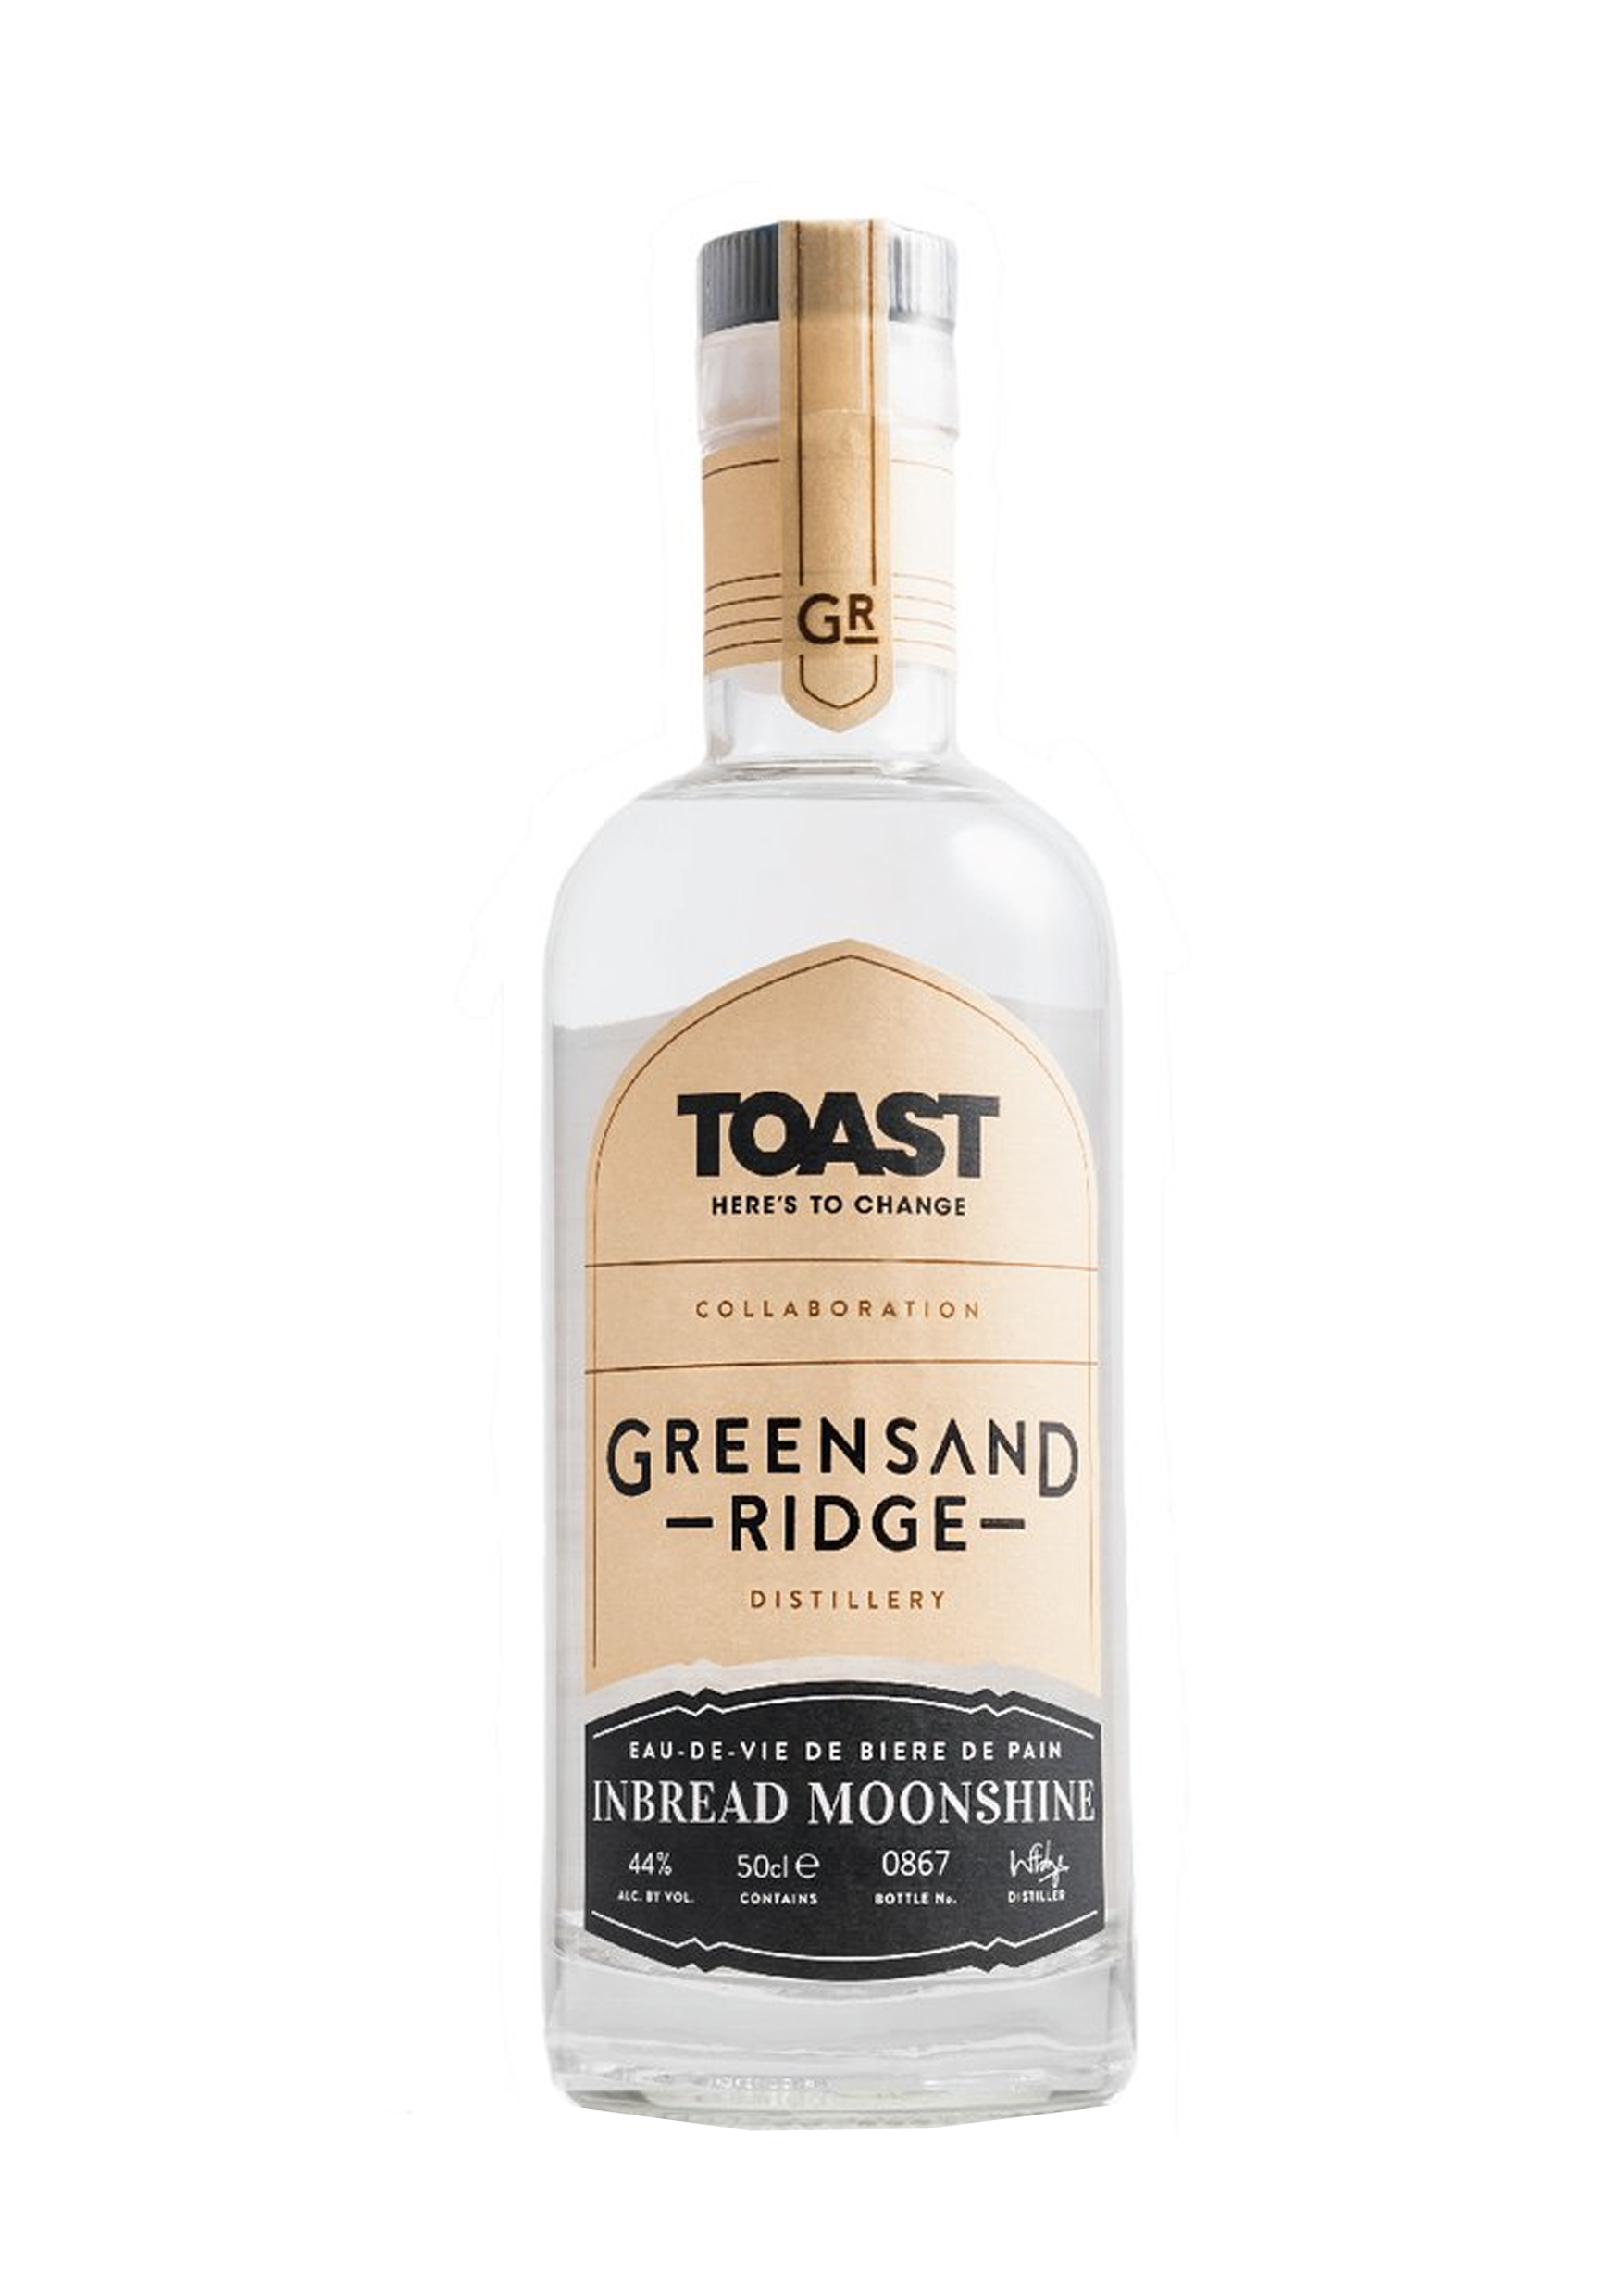 Greensand Ridge Inbread Moonshine